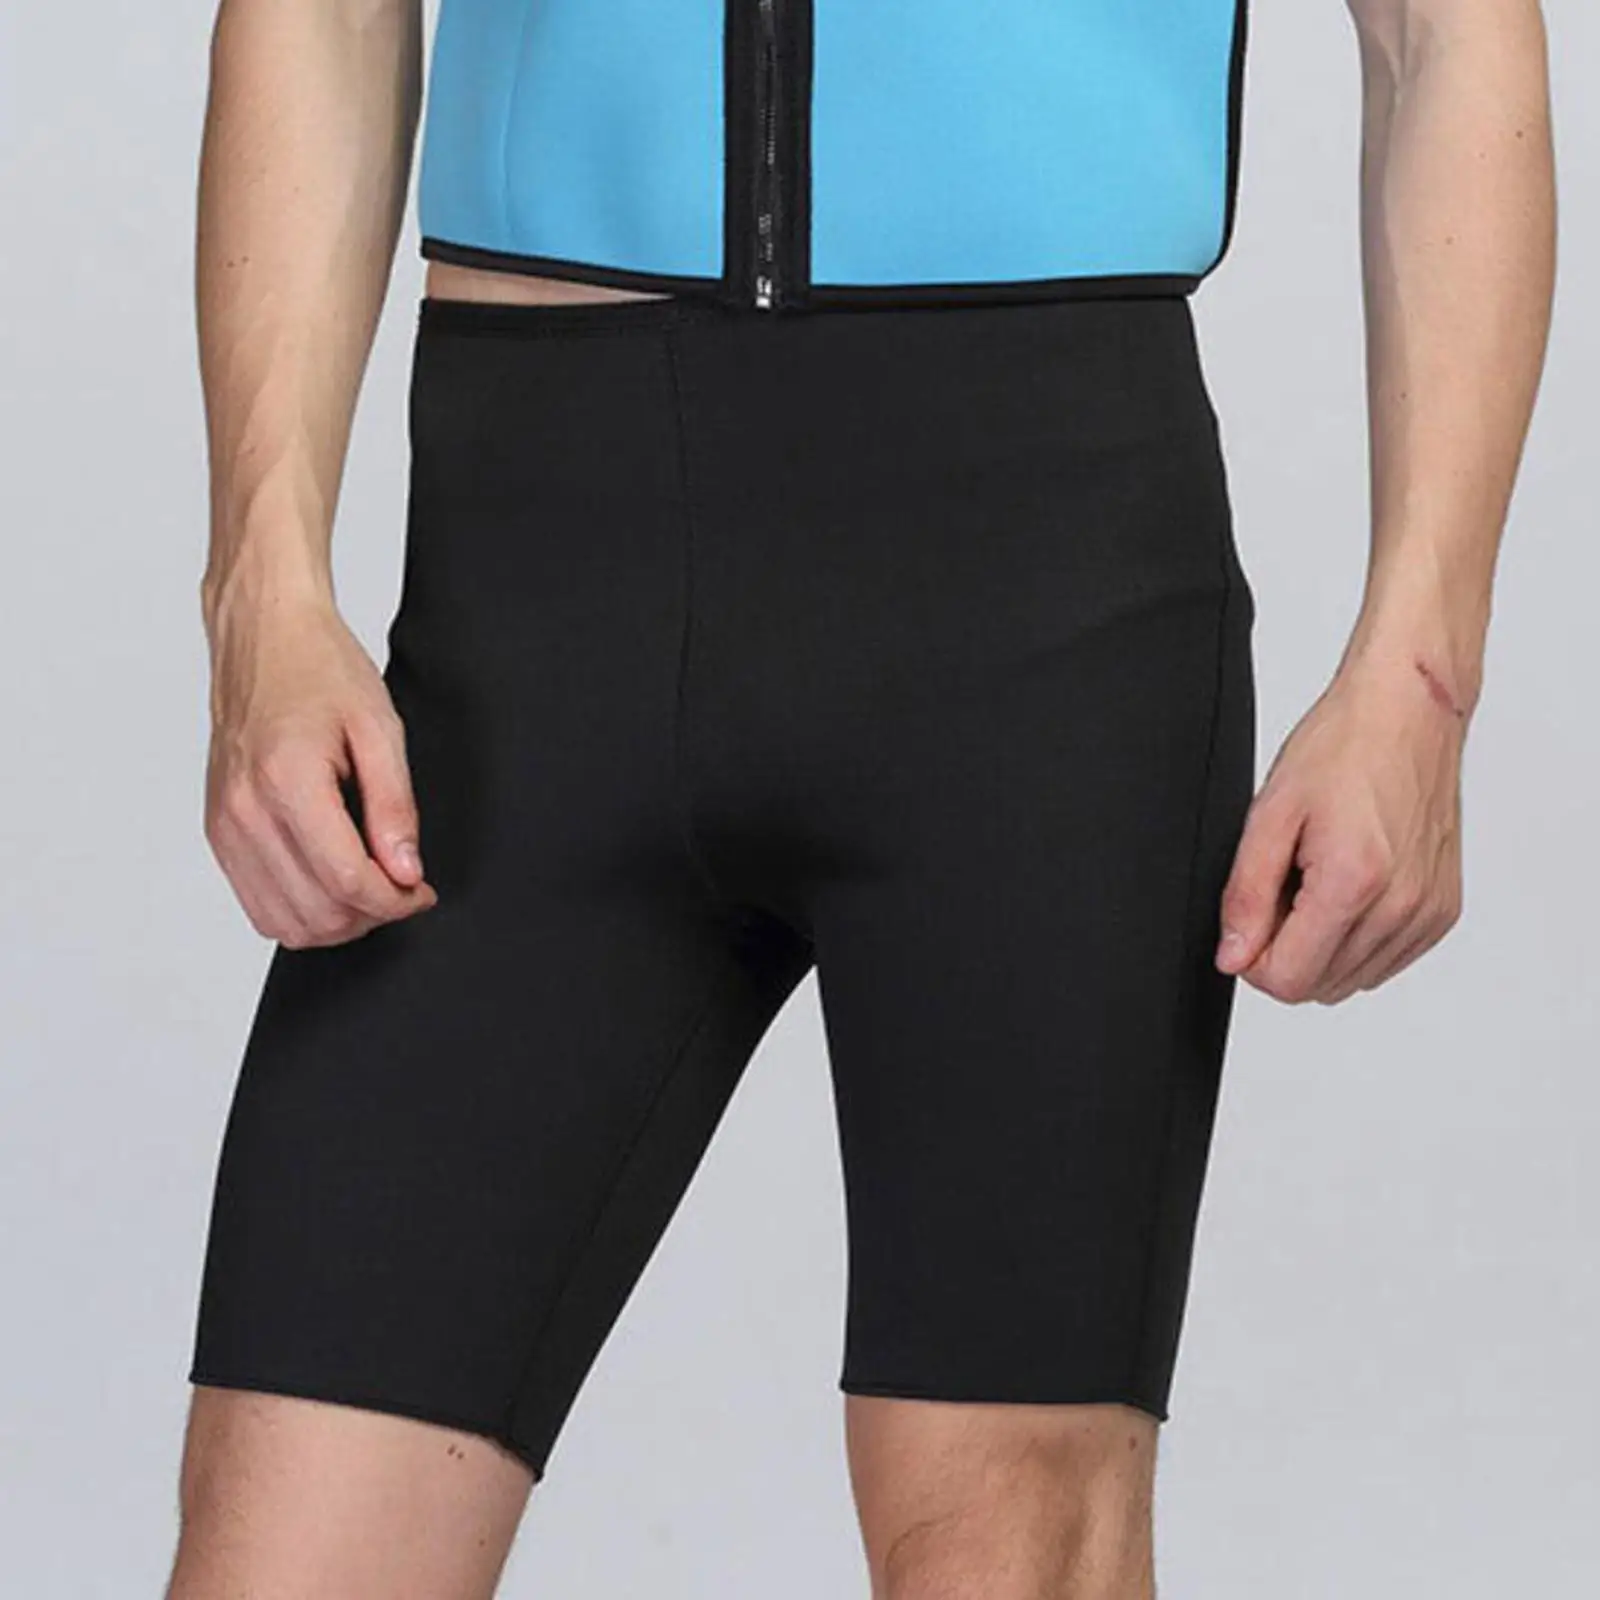 Wetsuit Shorts Men Premium 3mm Neoprene Shorts Scuba Diving Surfing Canoeing Kayaking Swimming Suits